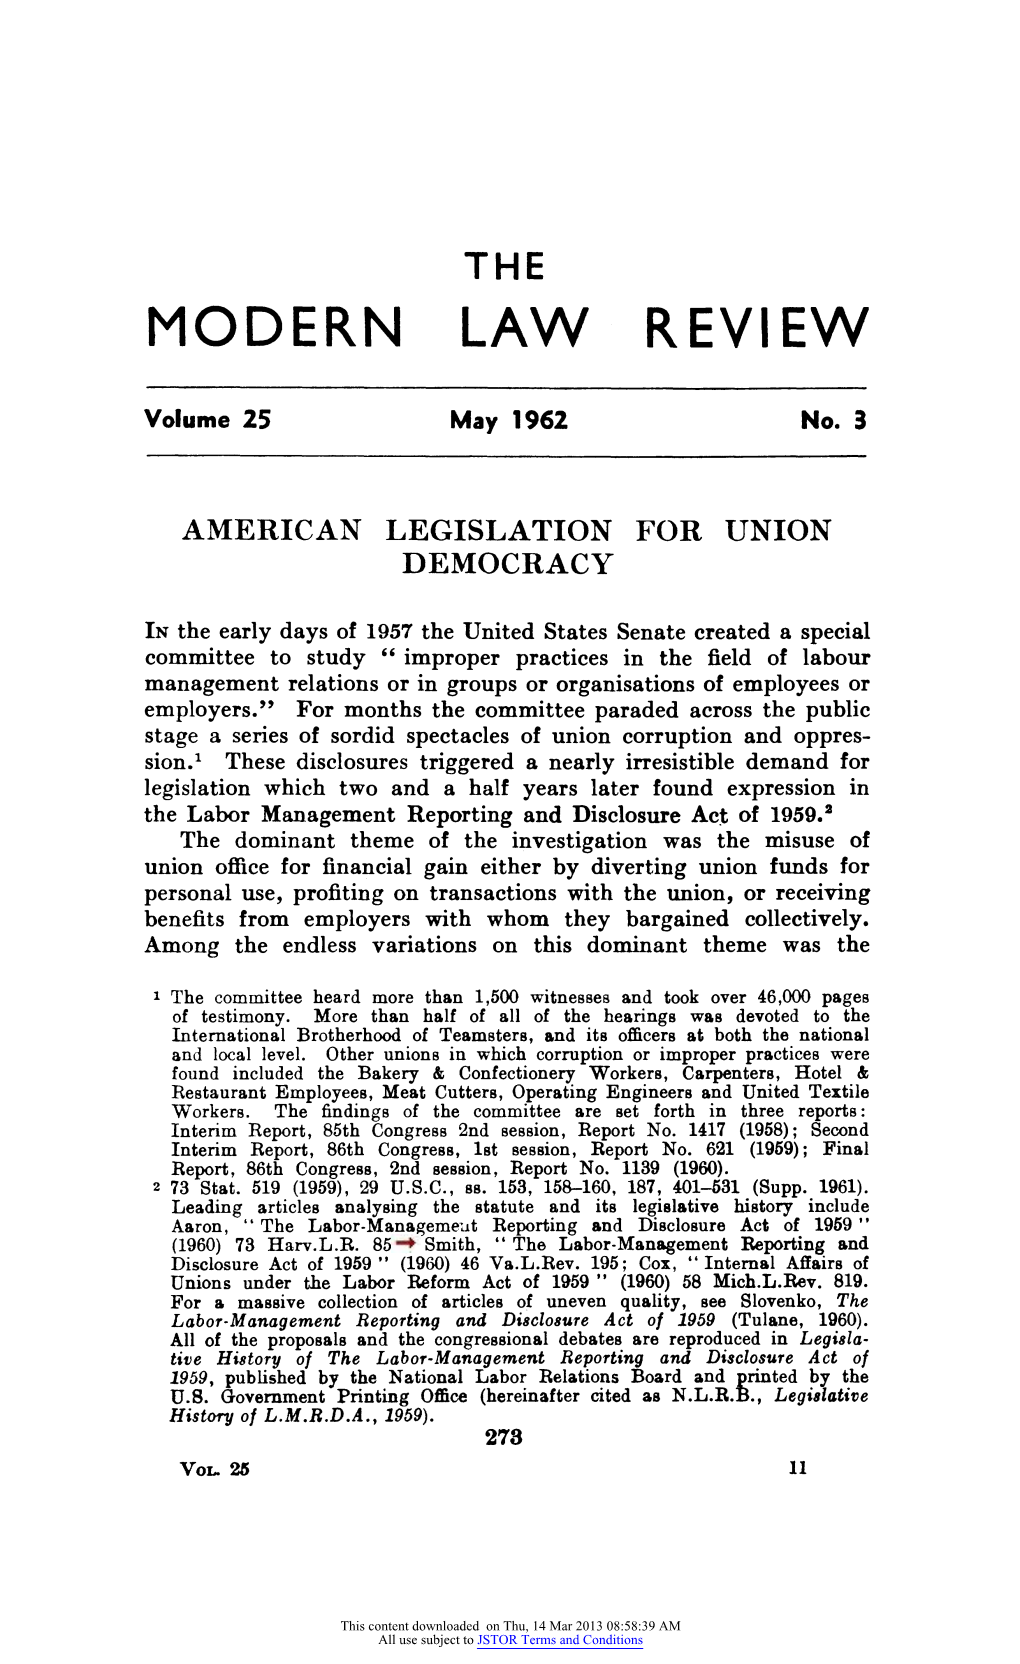 American Legislation for Union Democracy